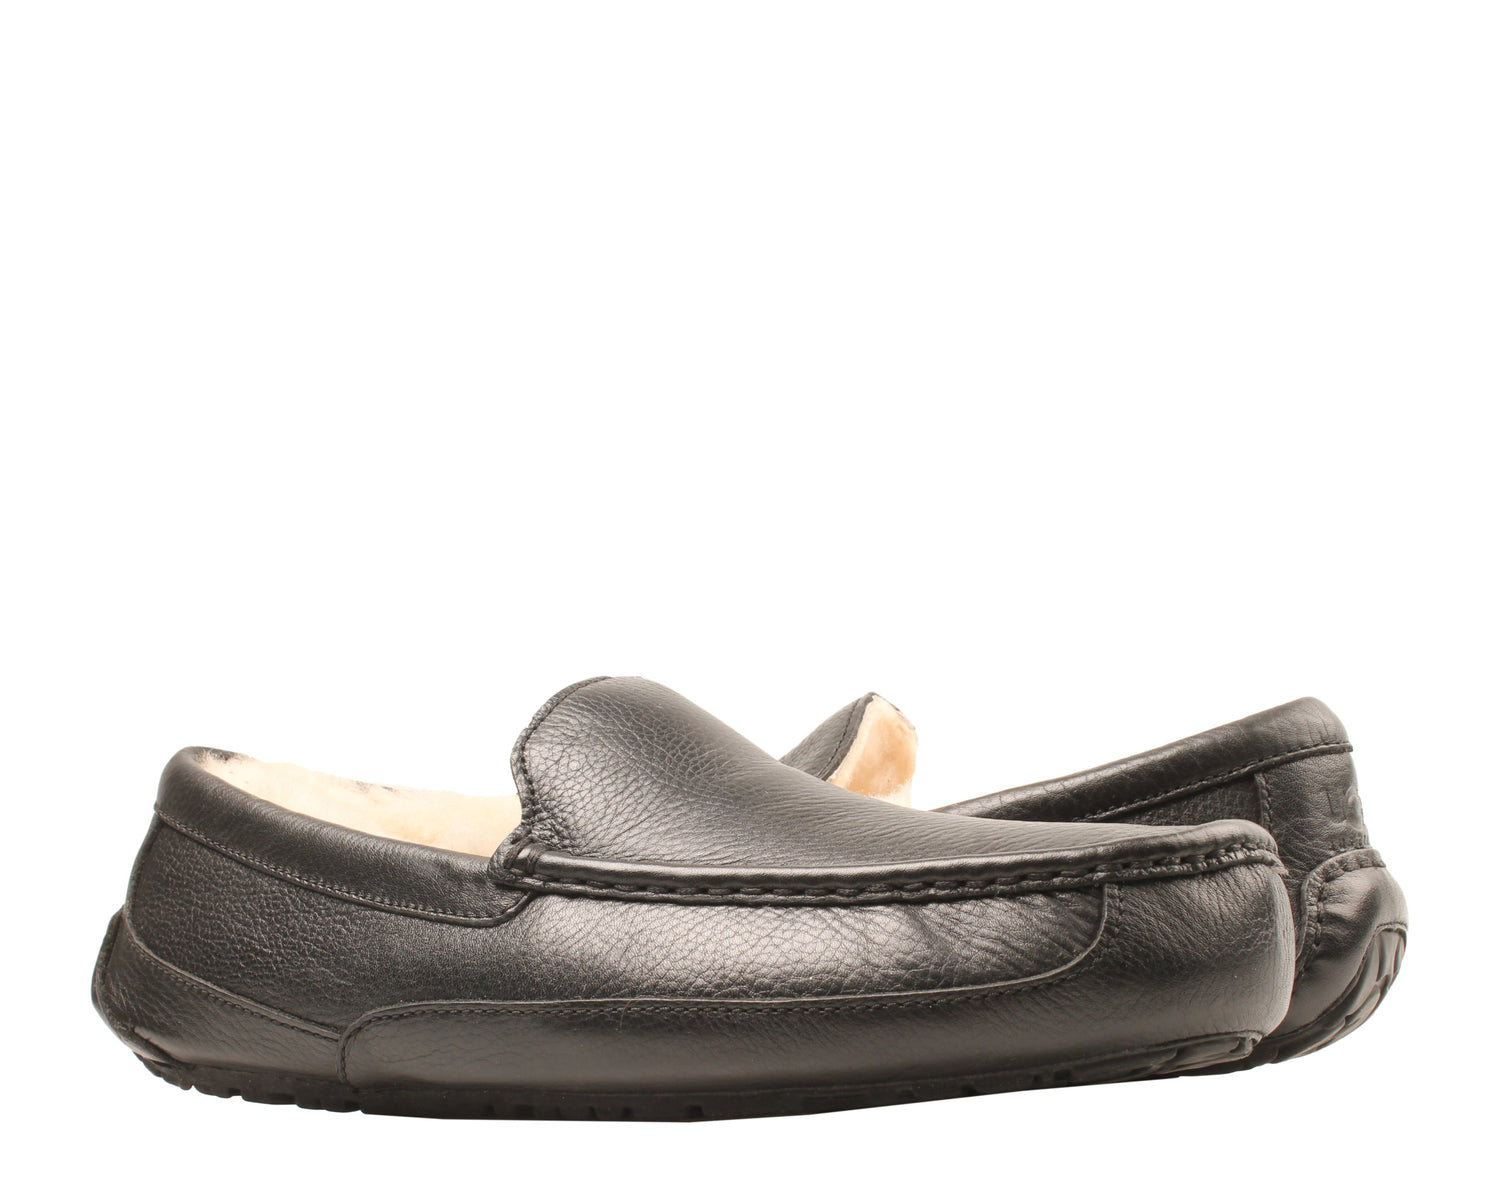 UGG Australia Ascot Leather Moccasin Men's Slippers